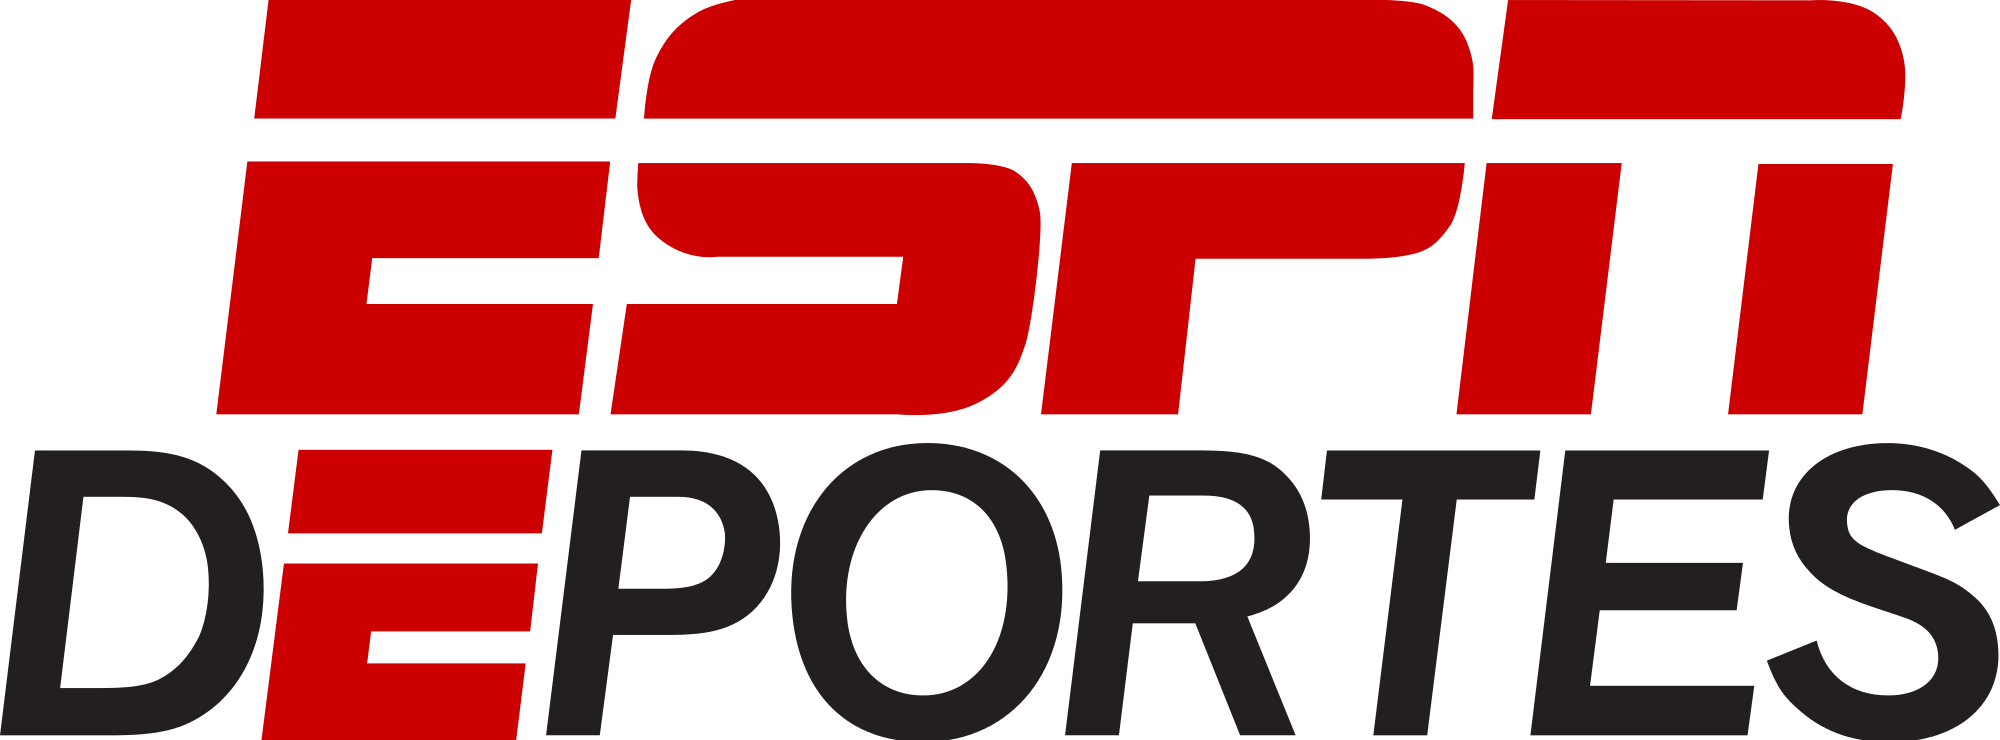 Next Season's Super Bowl From Atlanta Will Be Televised - Espn Deportes Logo (2000x740)